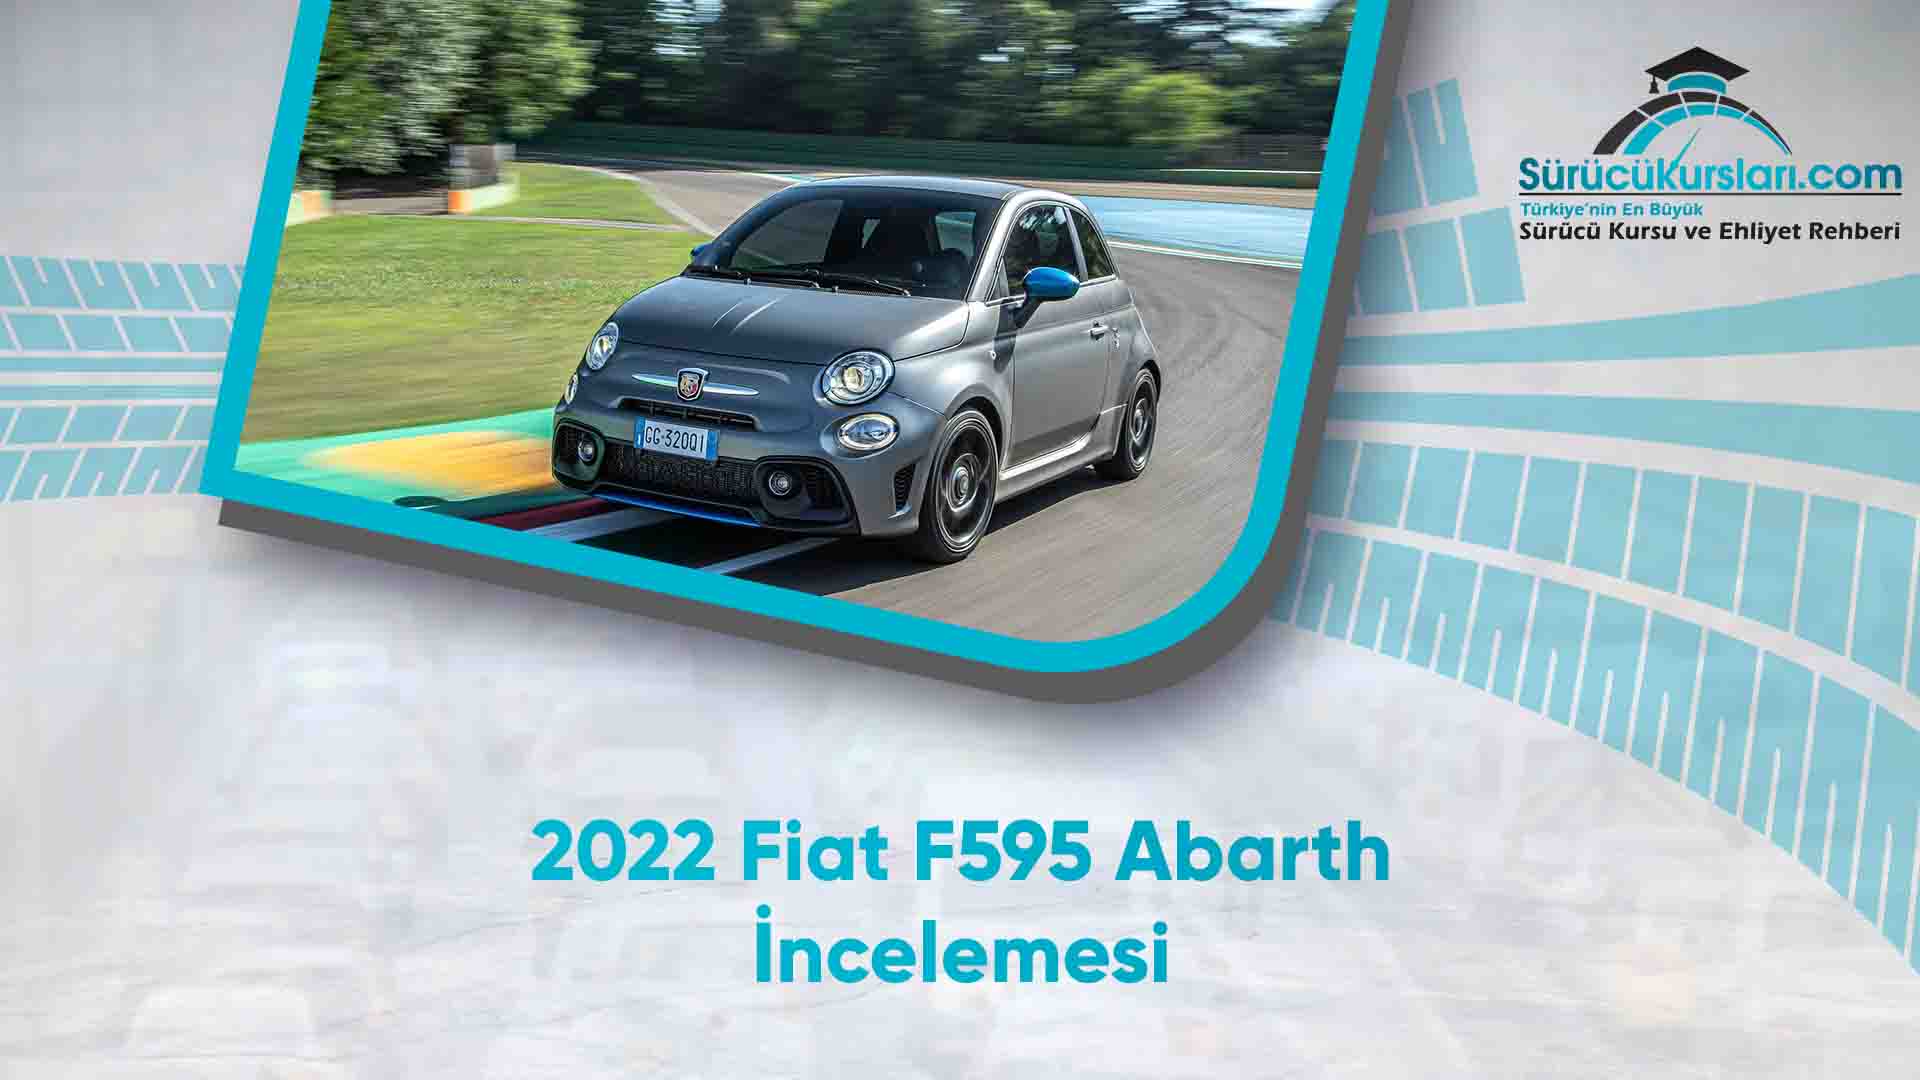 2022 Fiat F595 Abarth İncelemesi